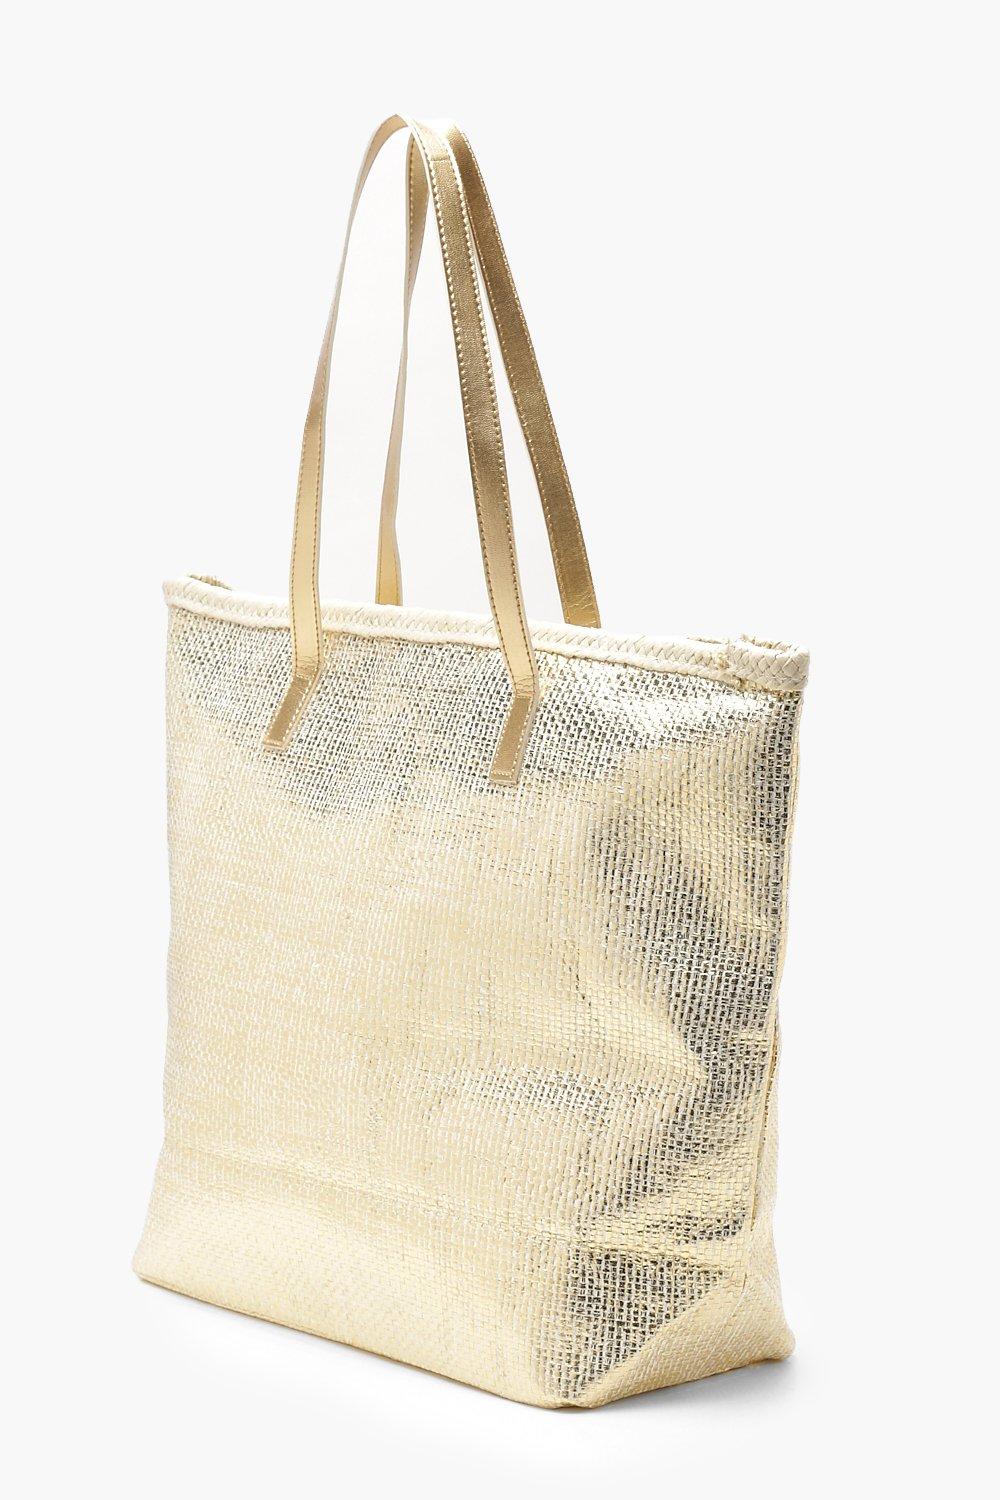 white and gold beach bag